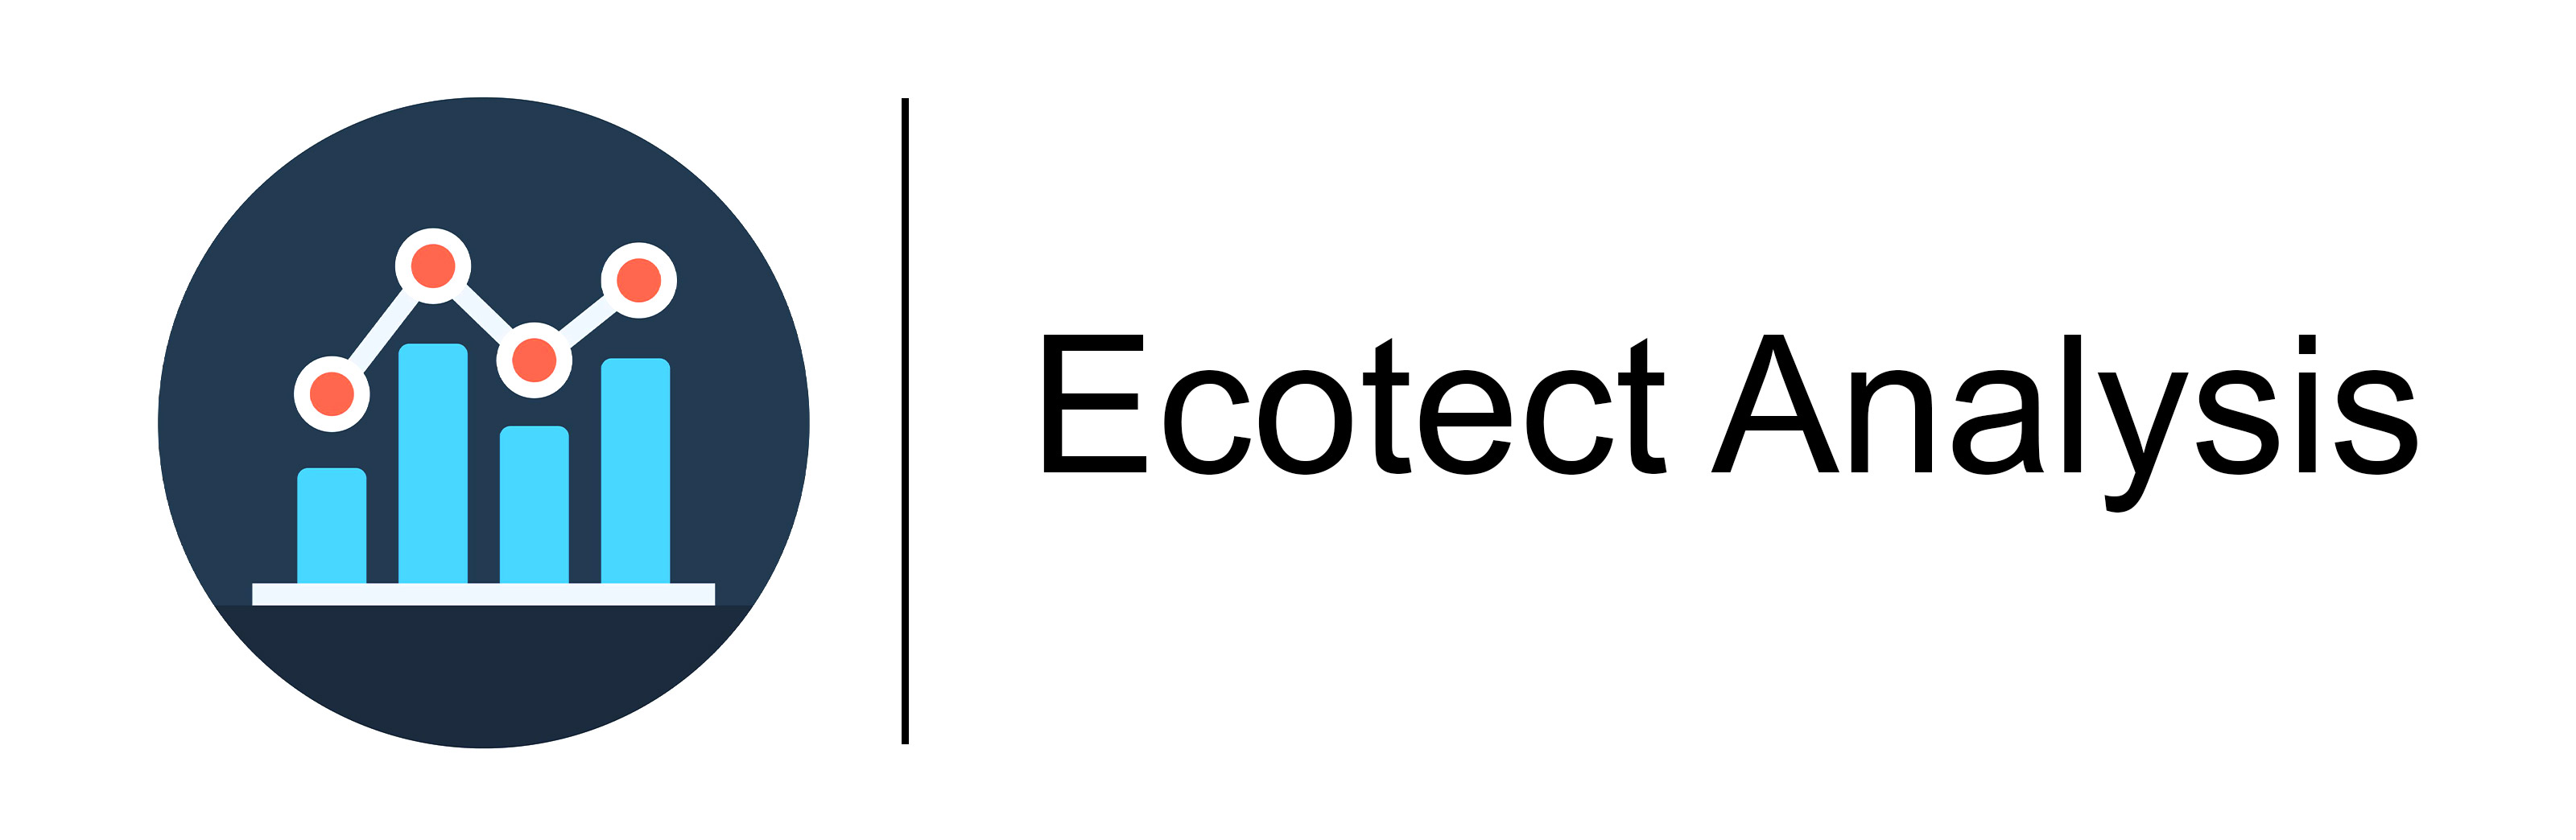 Ecotect Analysis mehregan